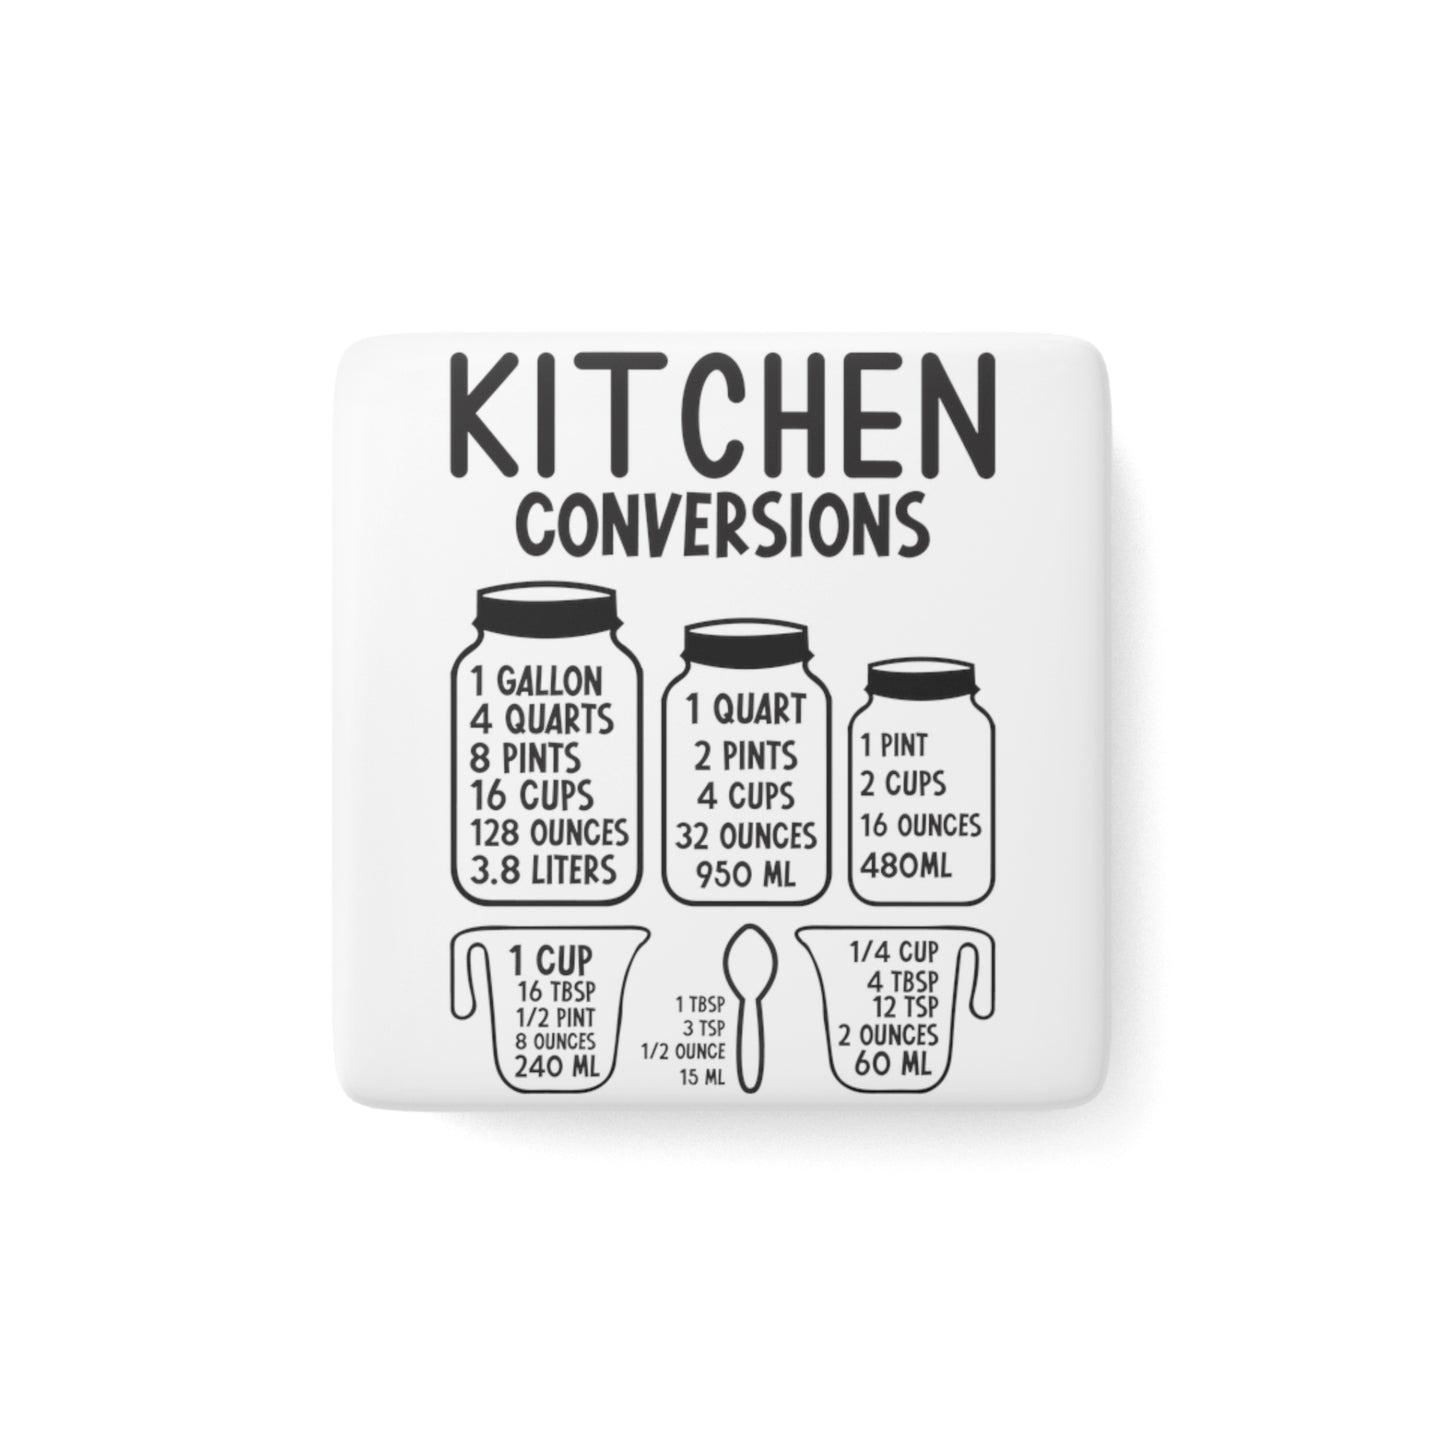 Kitchen Conversions Magnet - Kitchen Accessories - Measuring cups - measuring spoons - Unique magnets - kitchen magnets